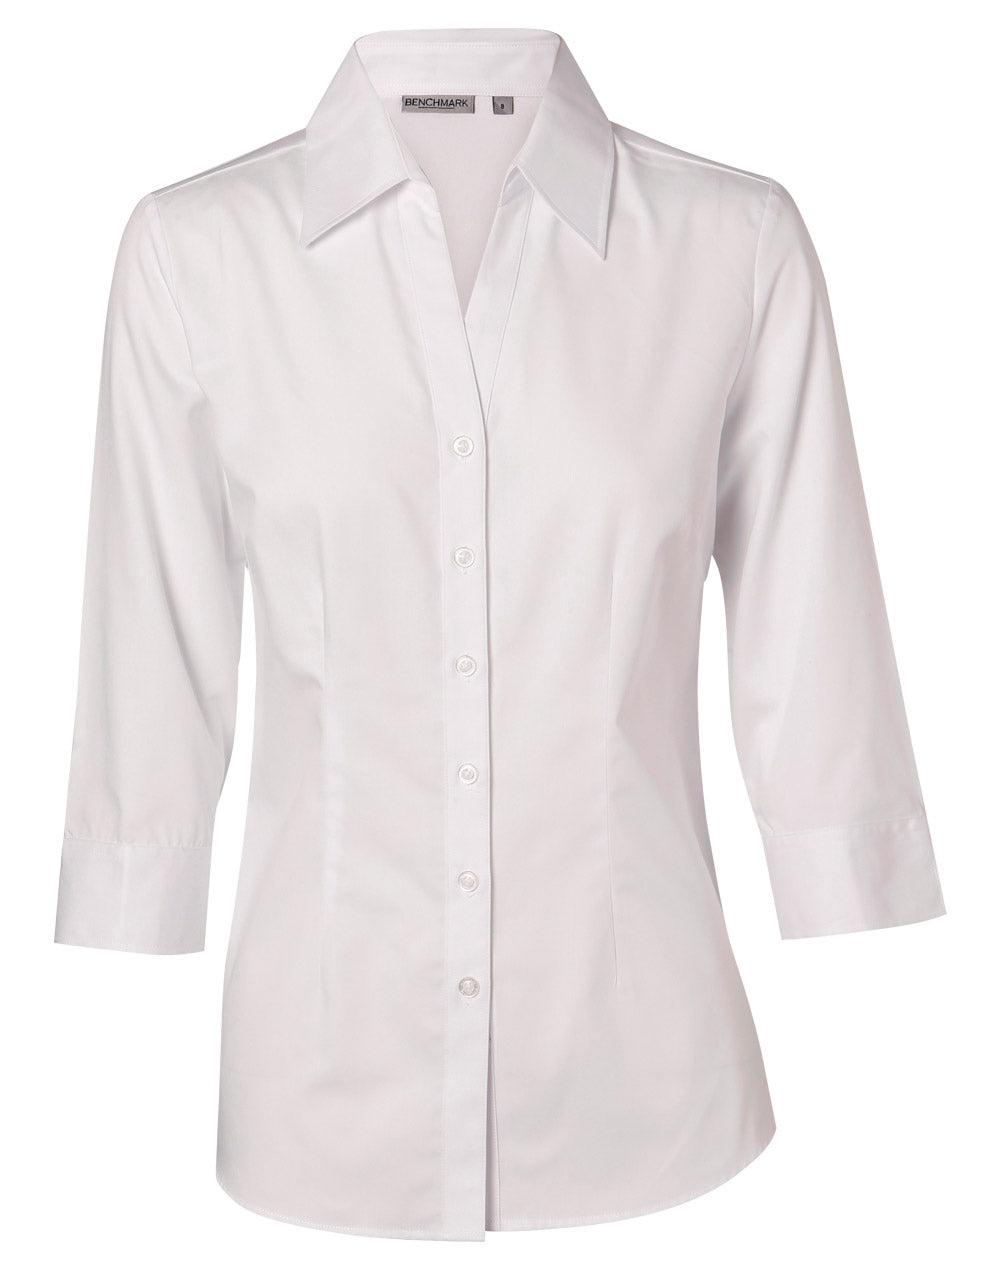 Winning Spirit- Women's Cotton/Poly Stretch 3/4 Sleeve Shirt-M8020Q